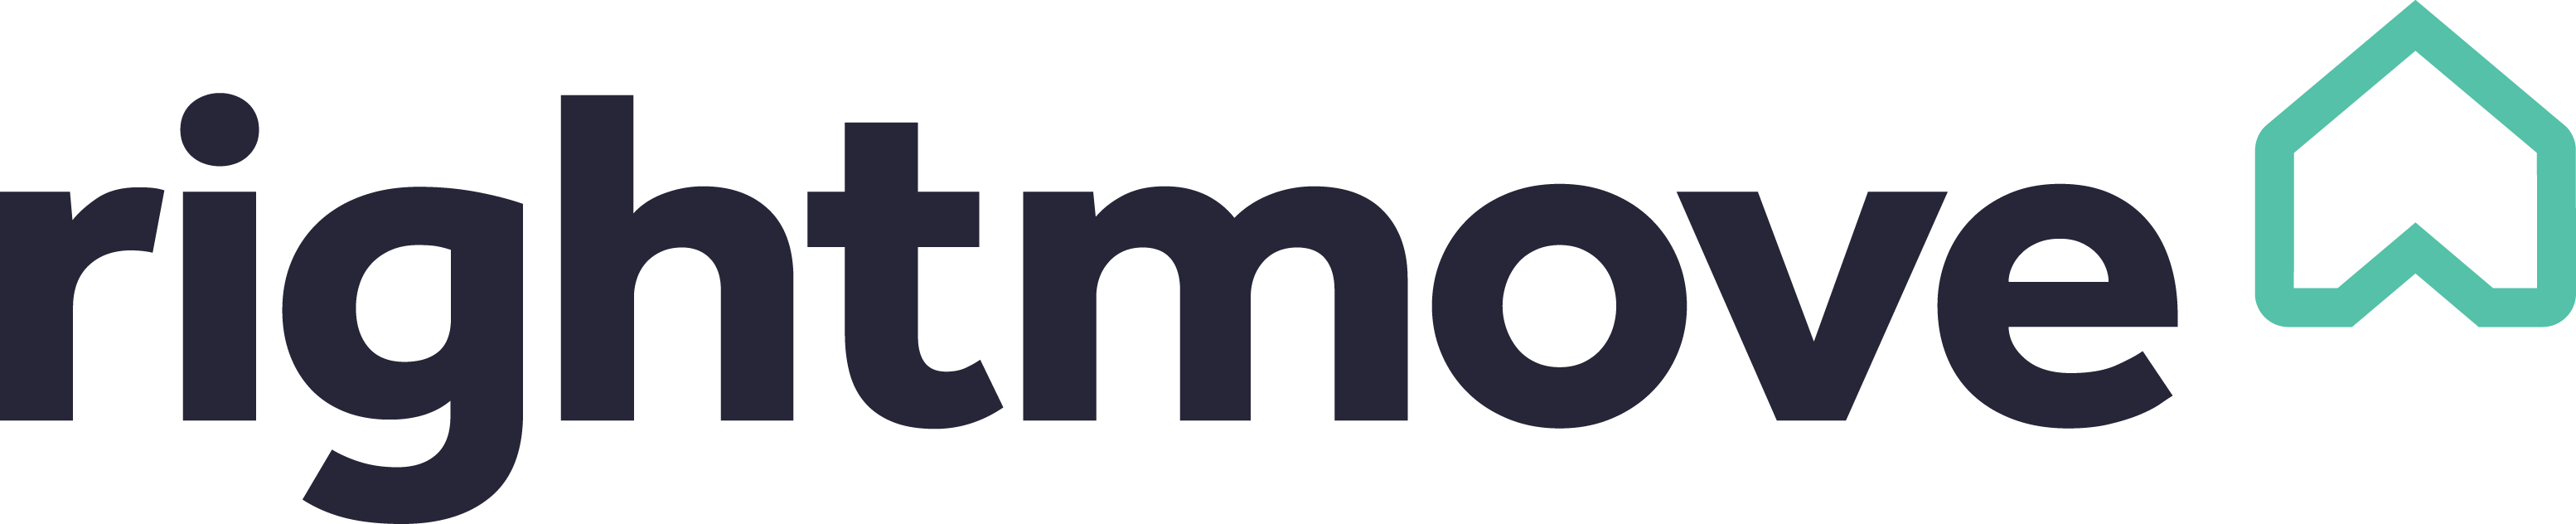 RightMove logo